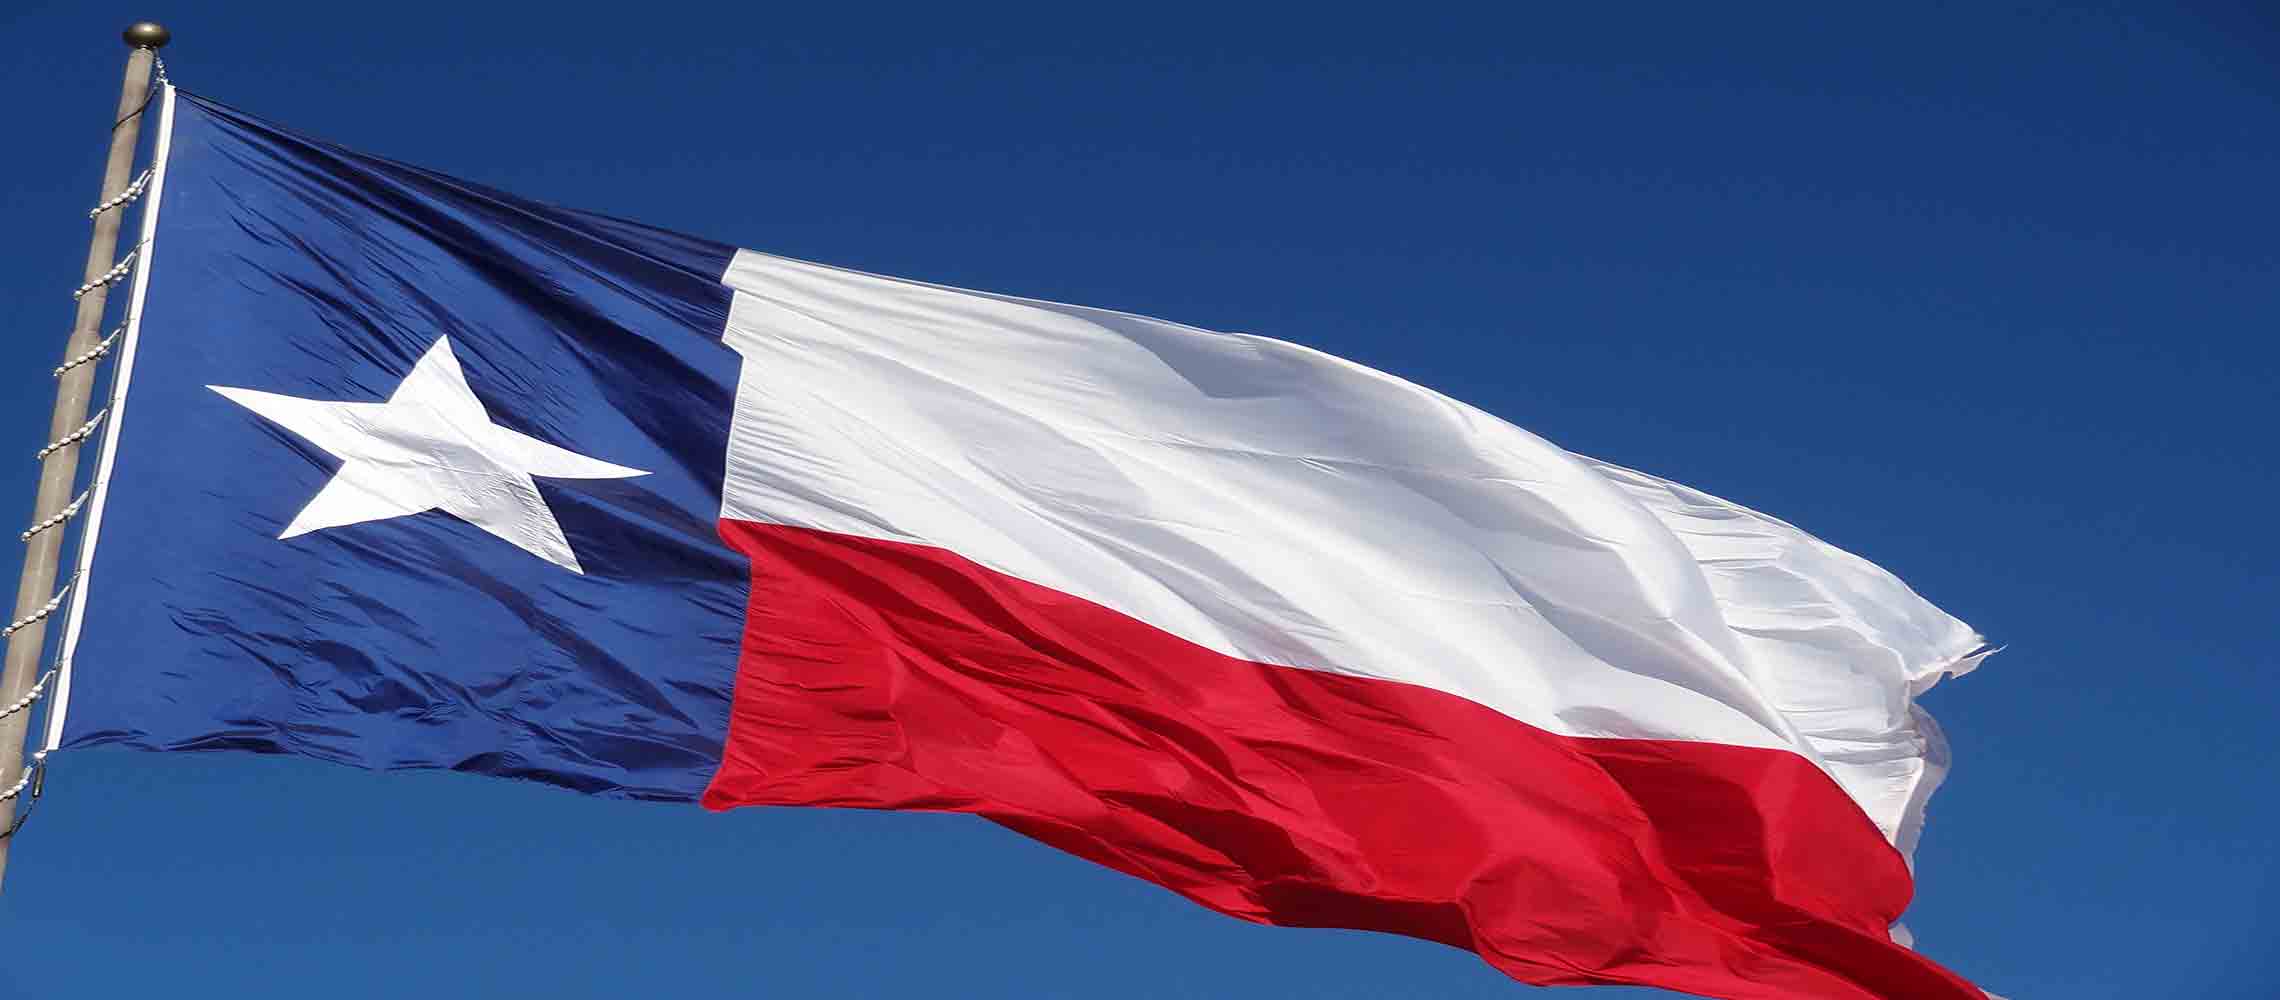 Texas State flag